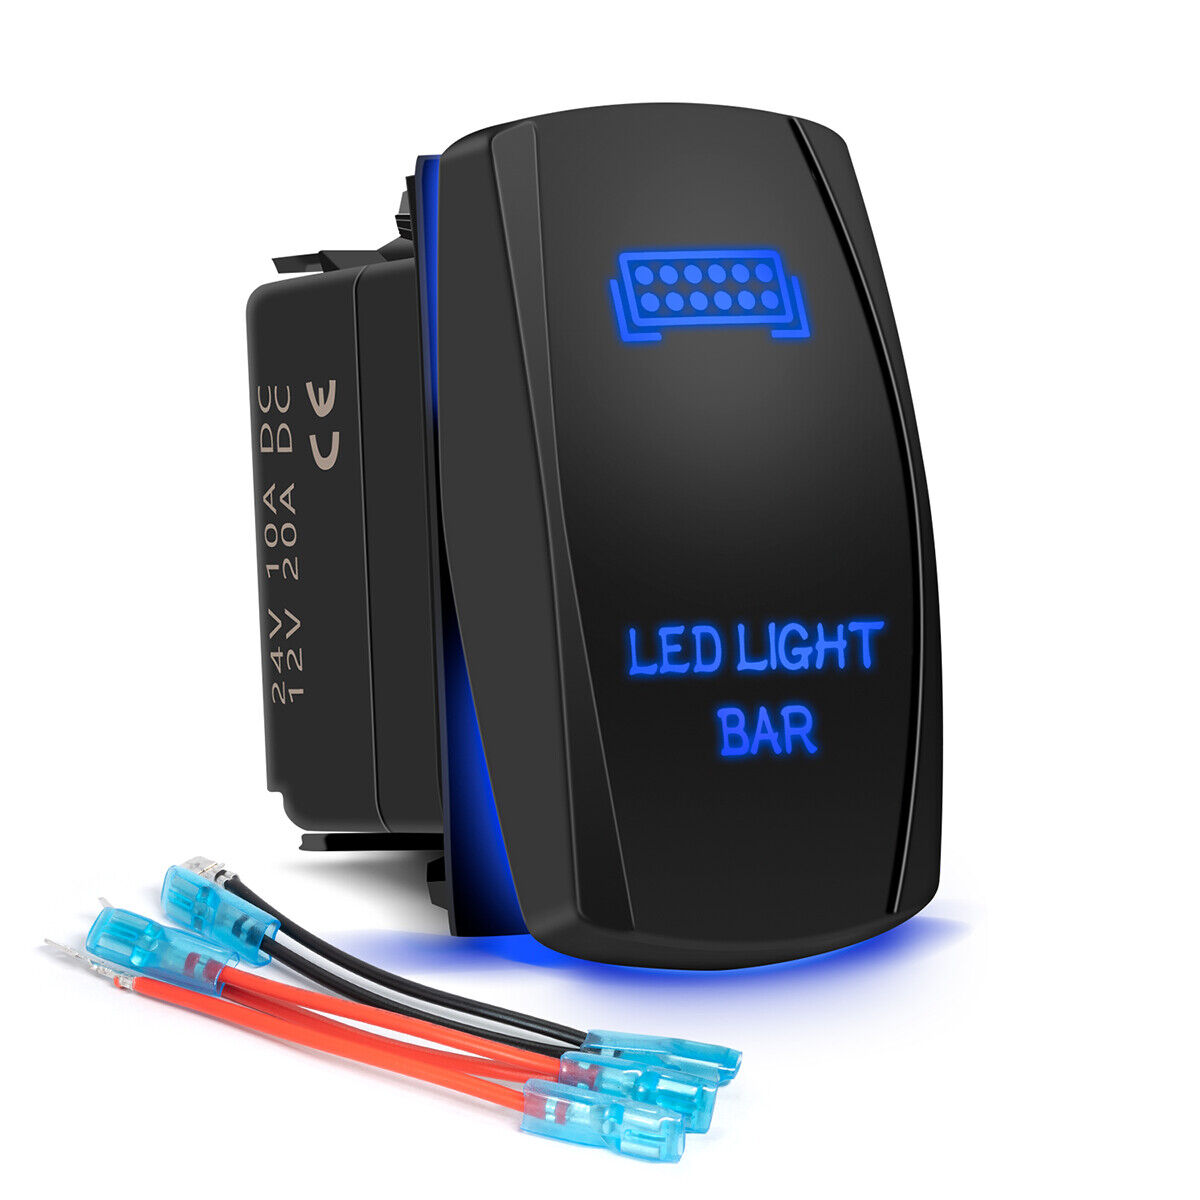 LED Light Bar Toggle Rocker Switch for Car Truck ATV UTV Polaris Ranger Can Am